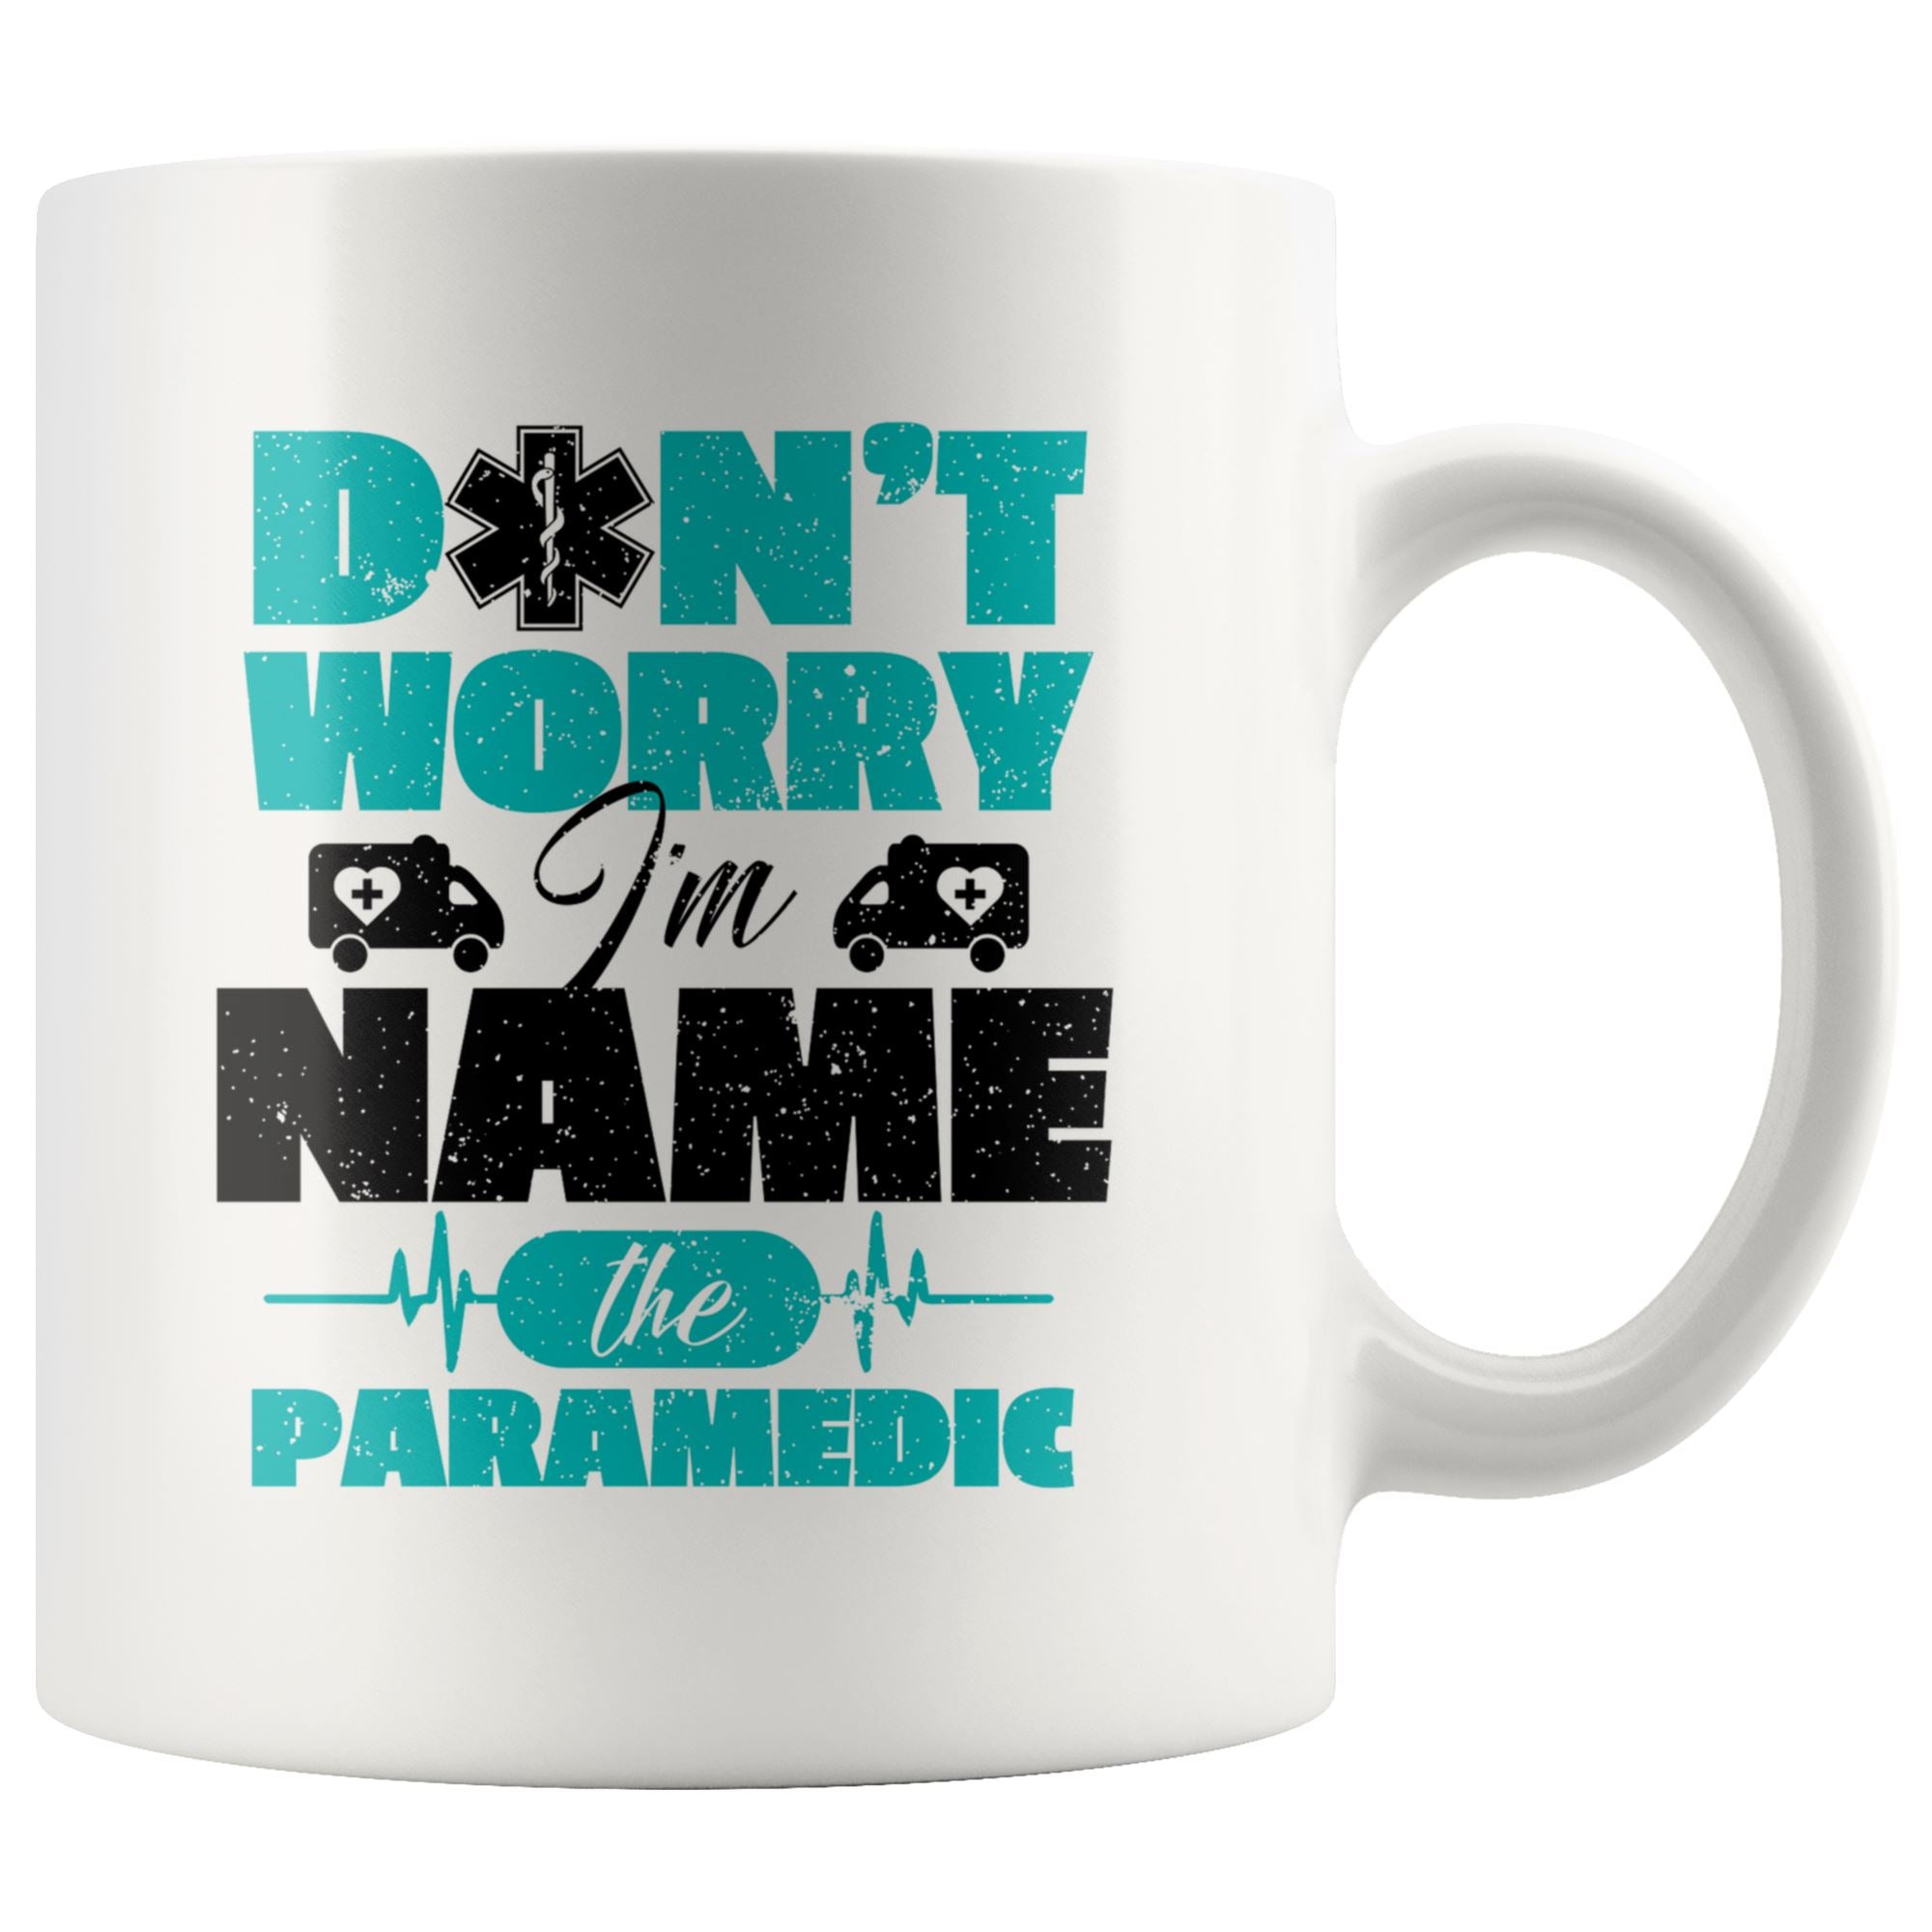 Paramedic Drinkware teelaunch 11oz Mug 